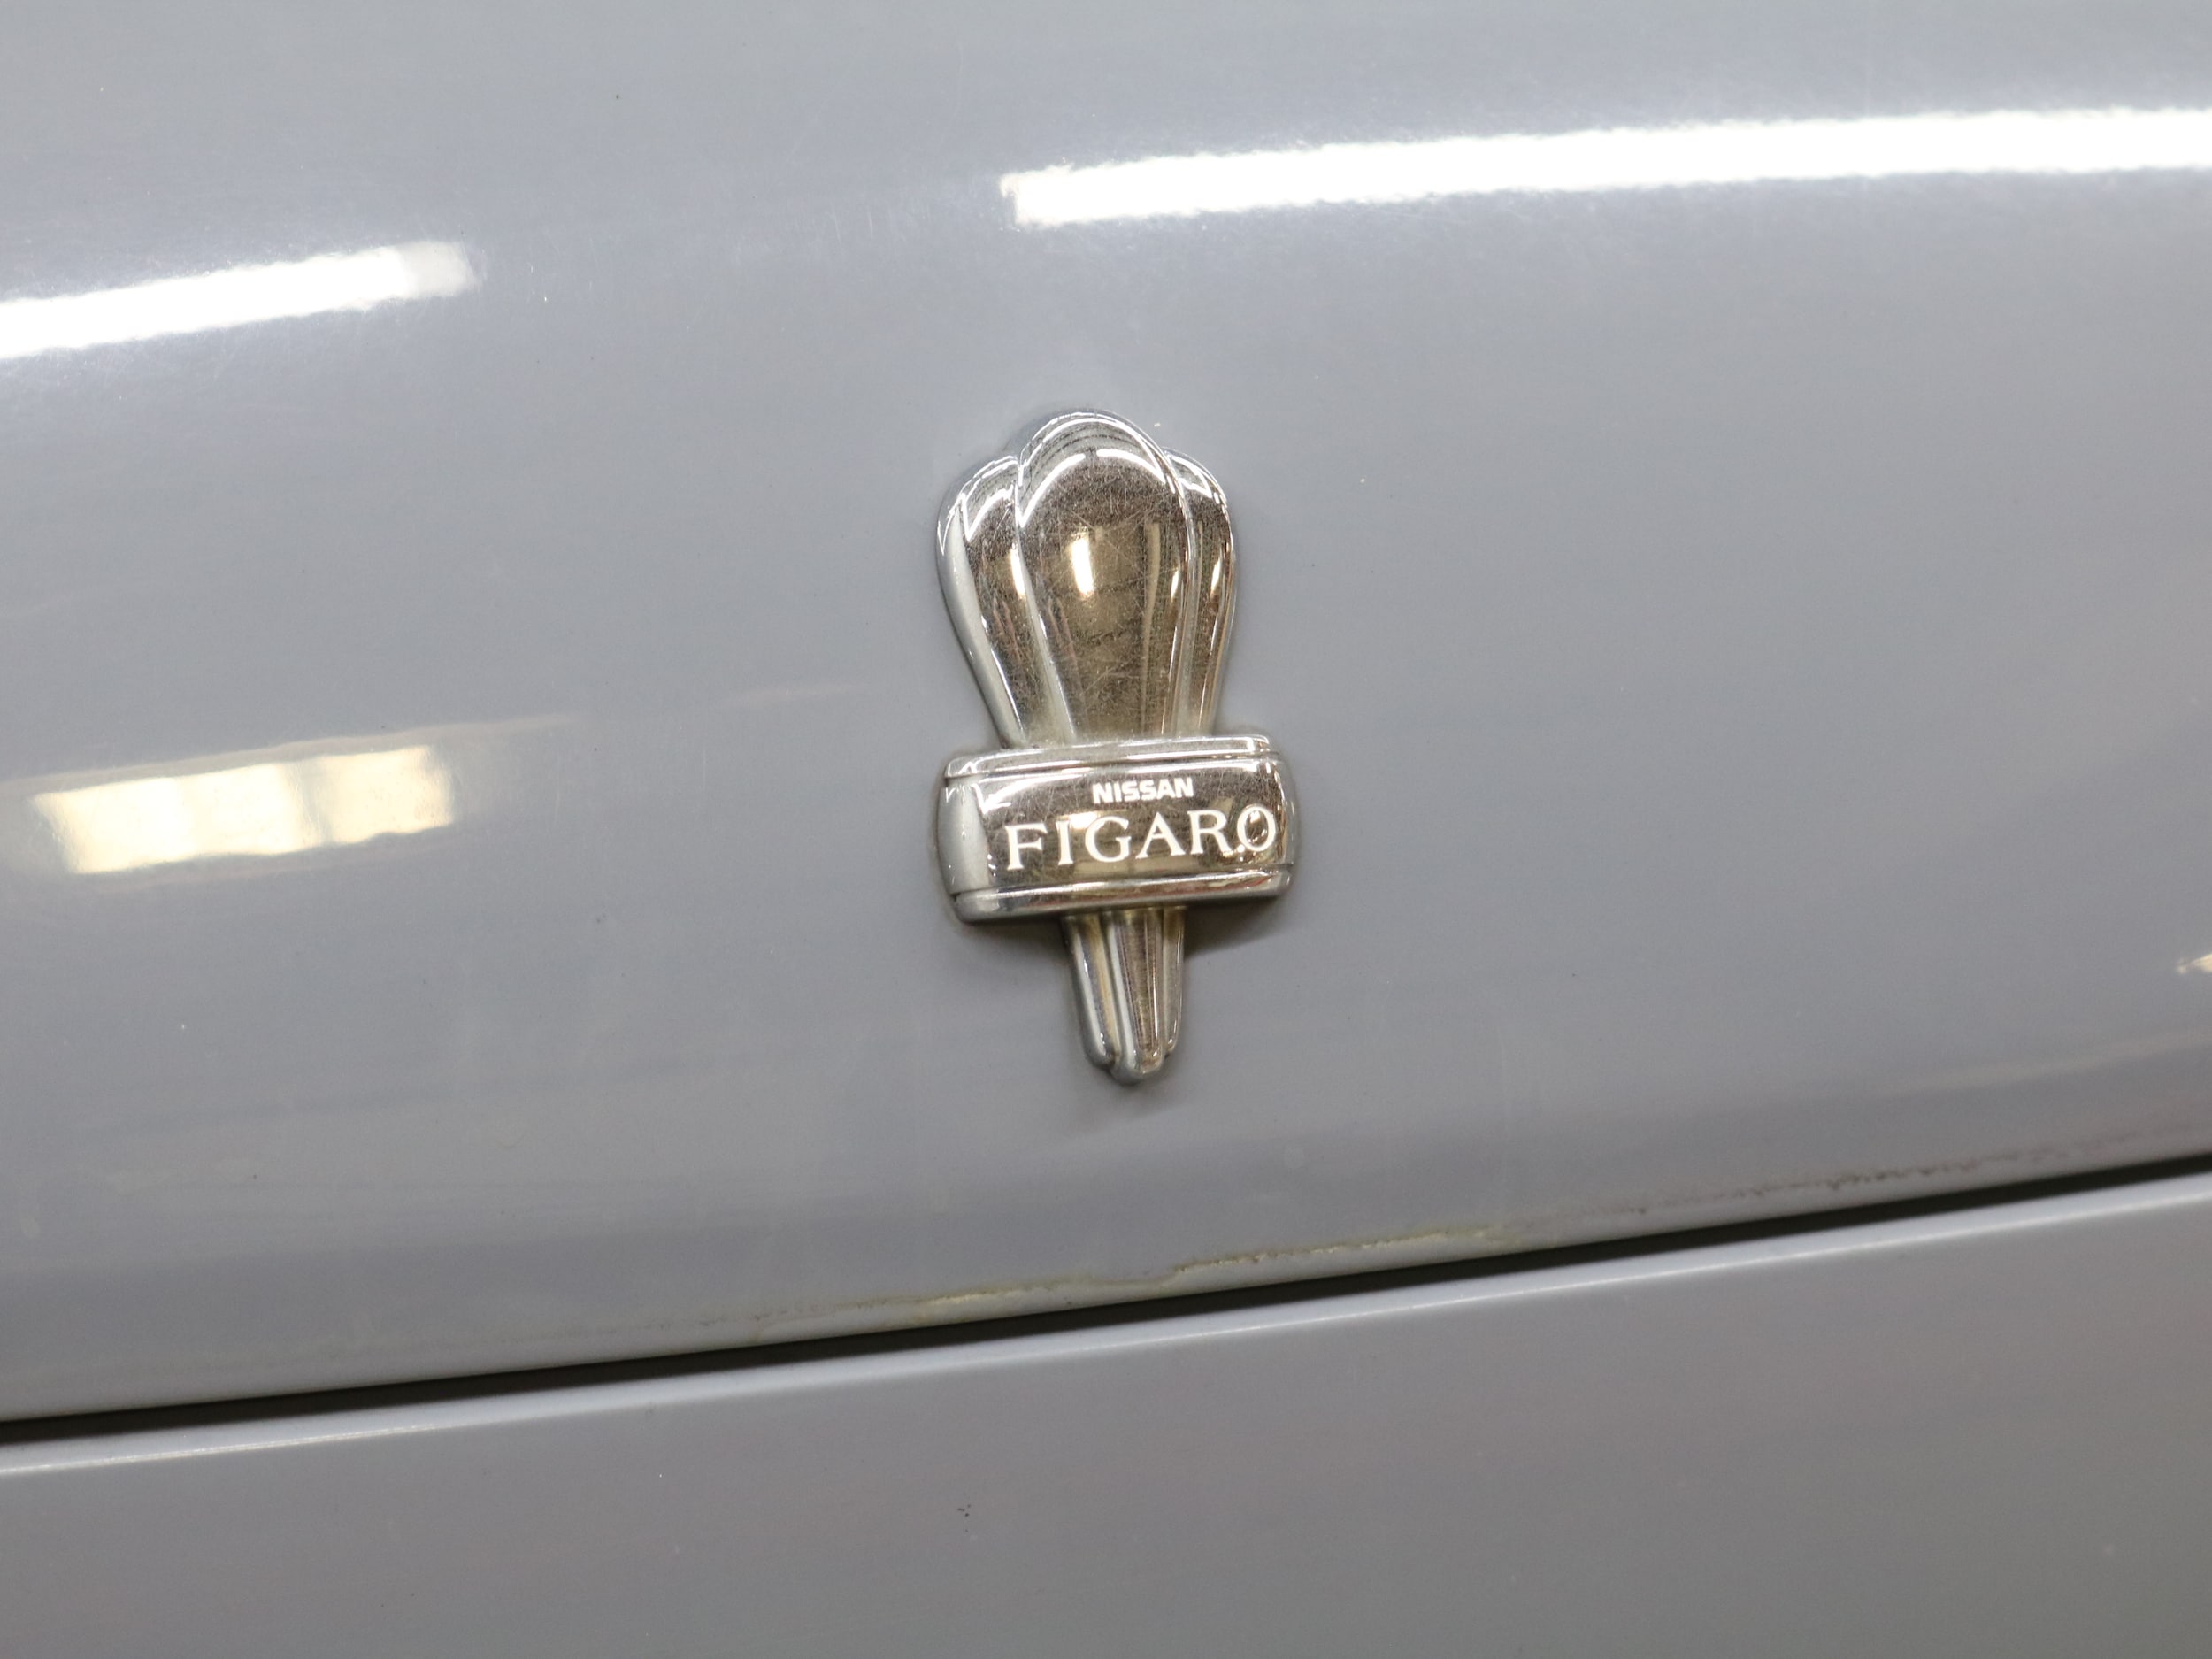 1992 Nissan Figaro 46